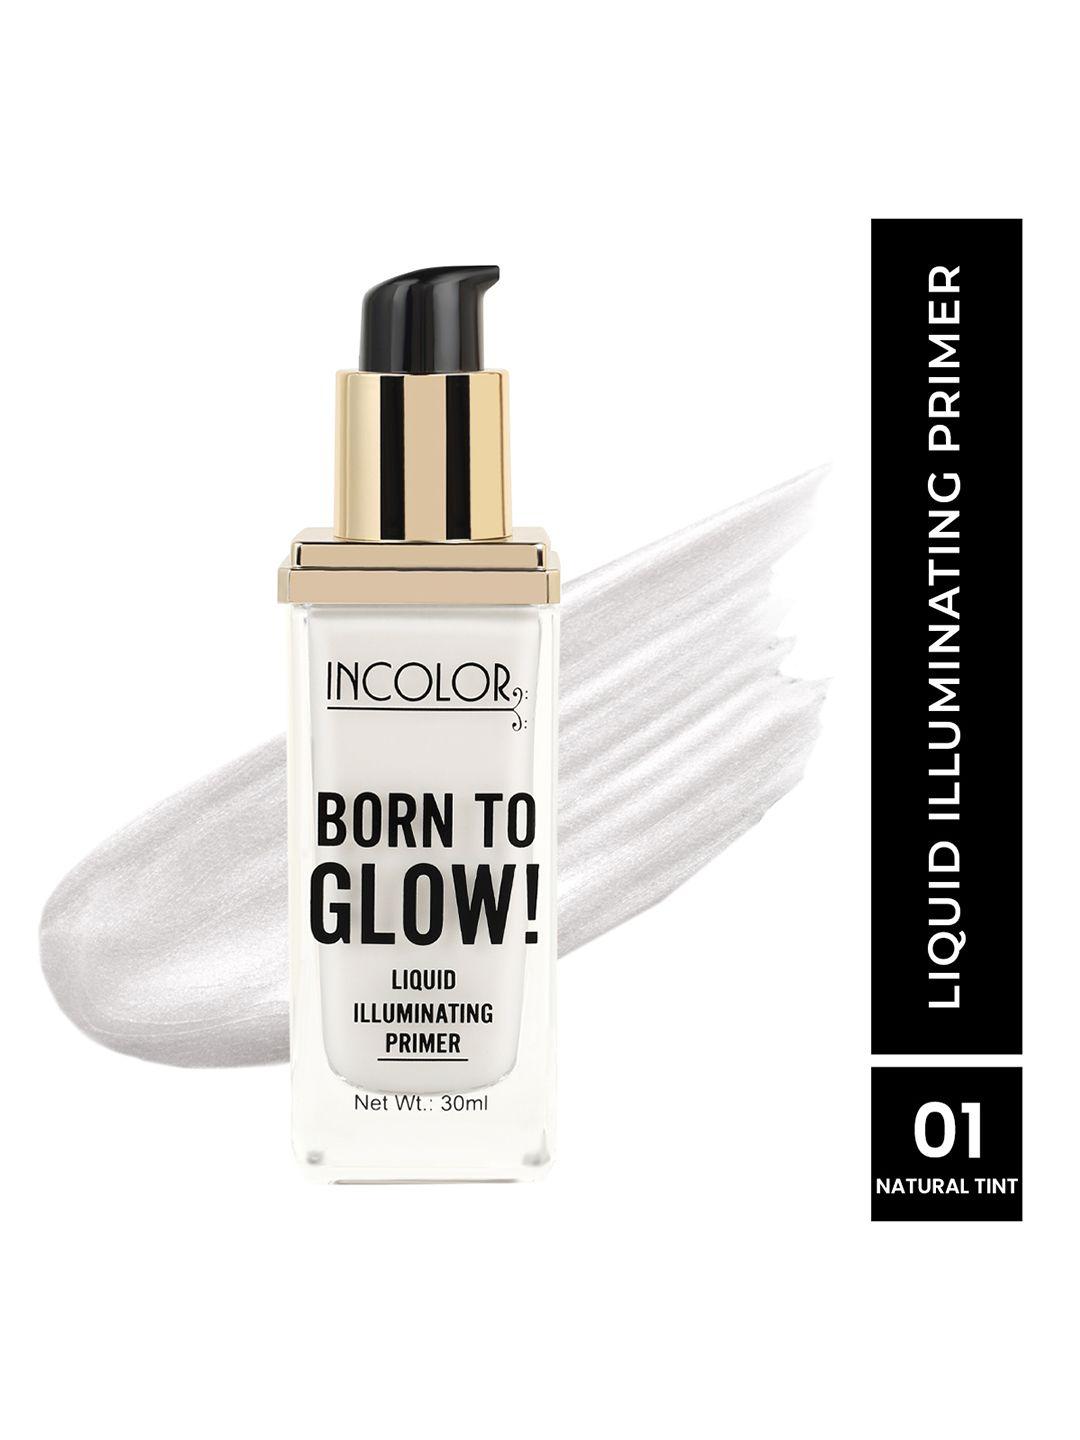 incolor born to glow liquid illuminating primer 30 ml - natural tint 01